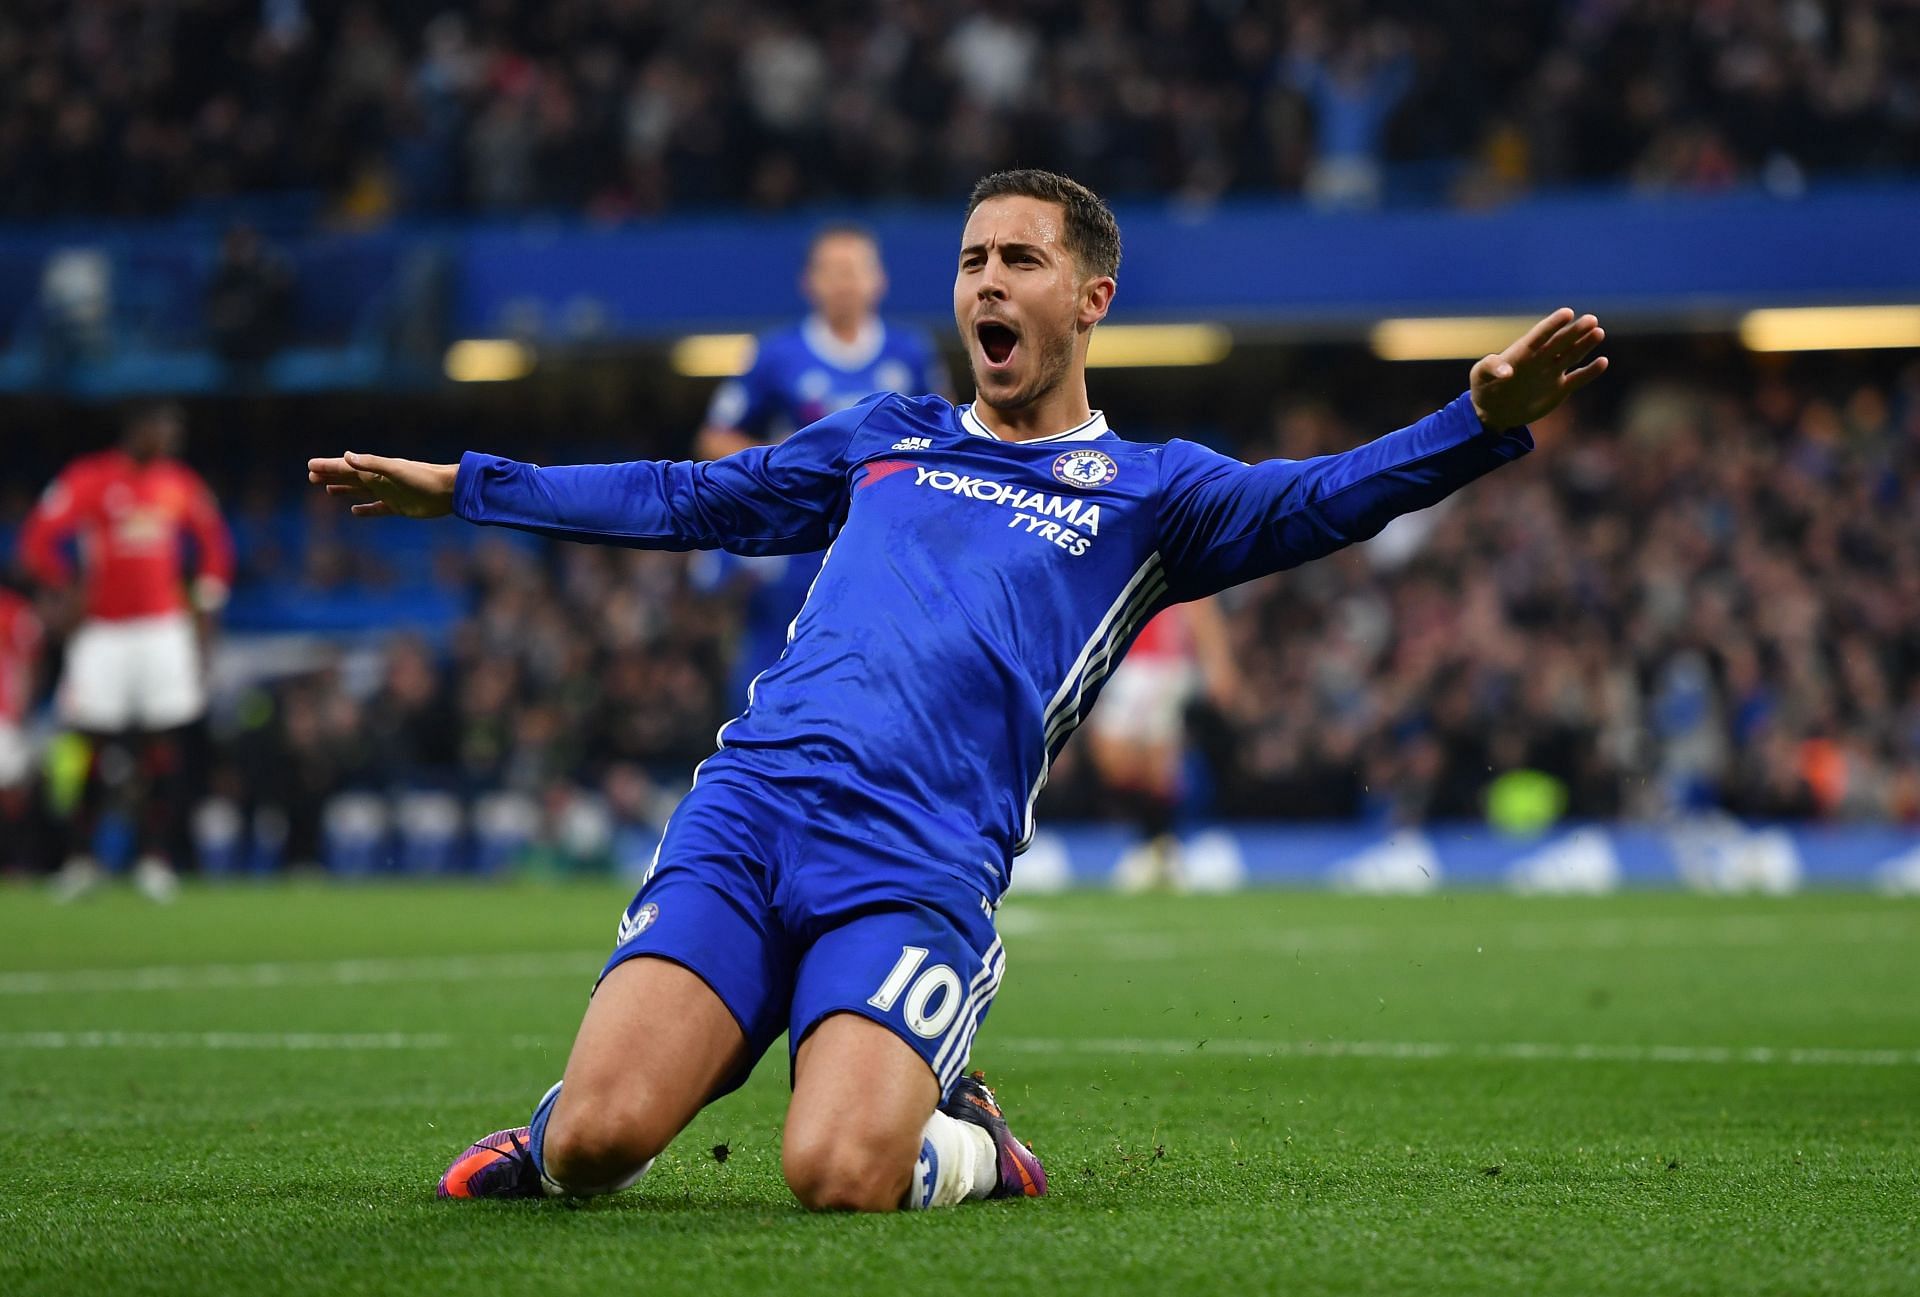 Eden Hazard is arguably Chelsea's greatest number 10